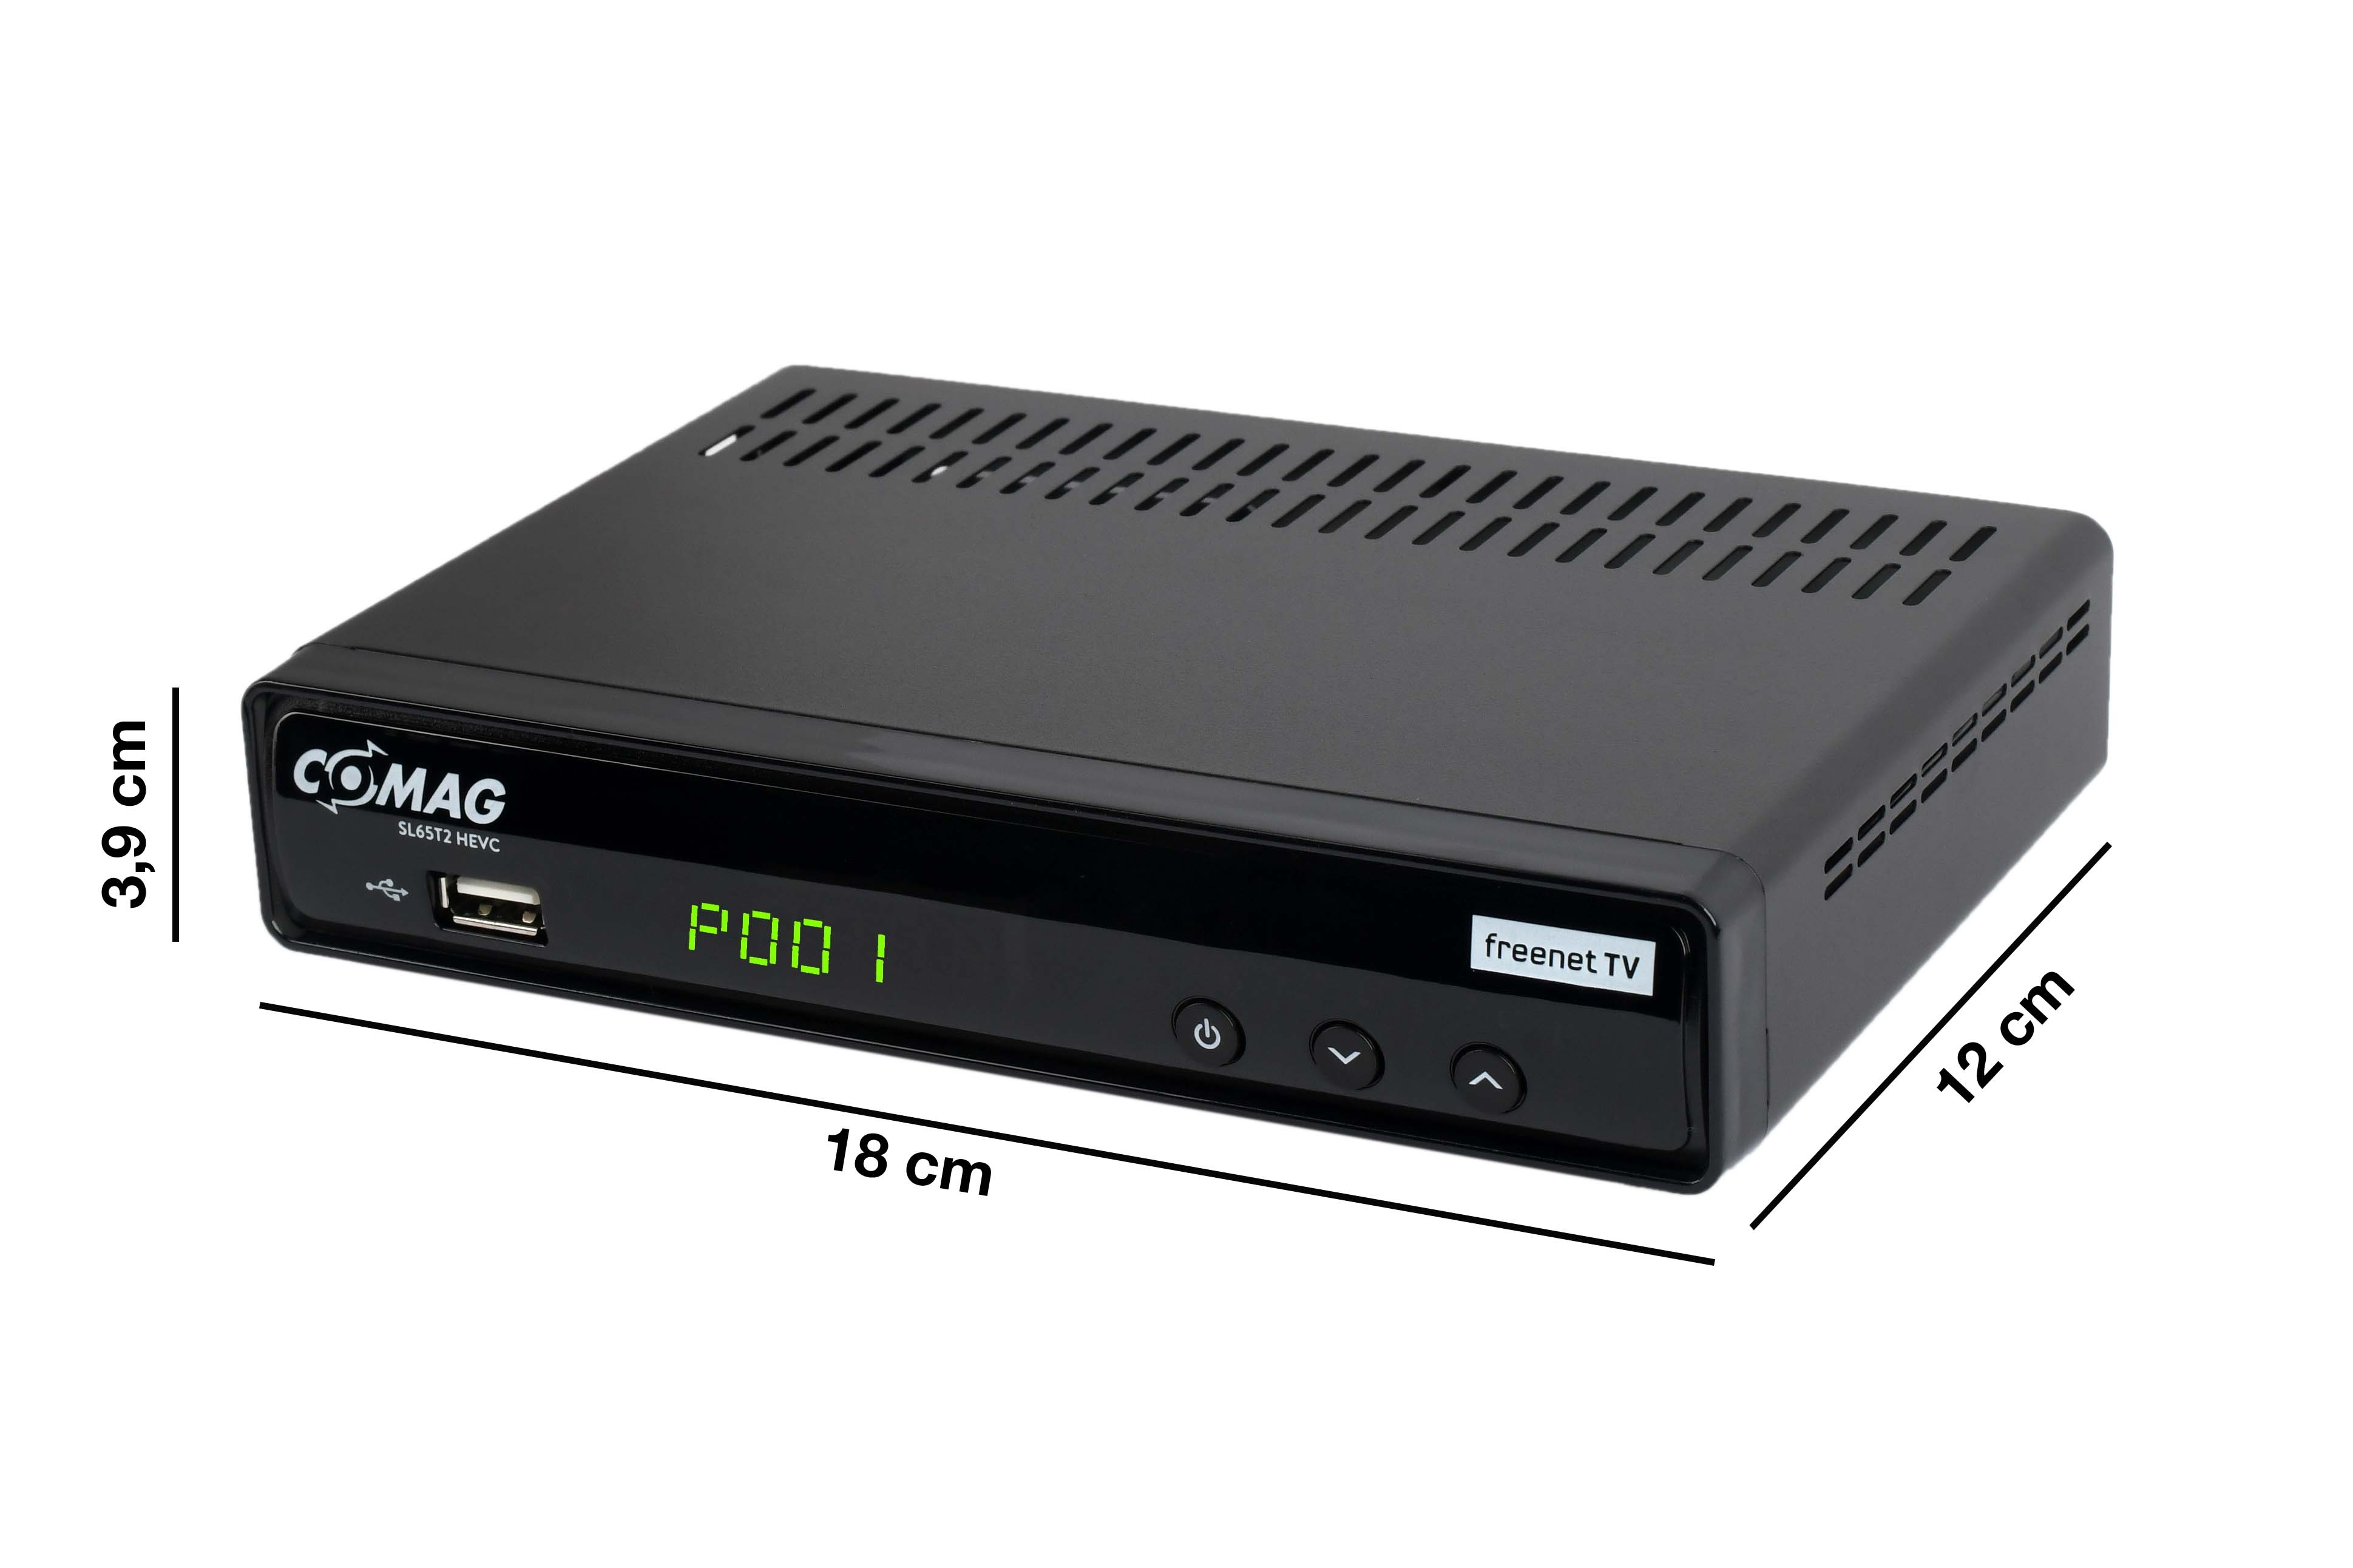 COMAG SL65T2 PVR-Funktion, (H.265), DVB-T2 (H.264), DVB-T, (HDTV, DVB-T2 Home Bundel DVB-T-Receiver schwarz)